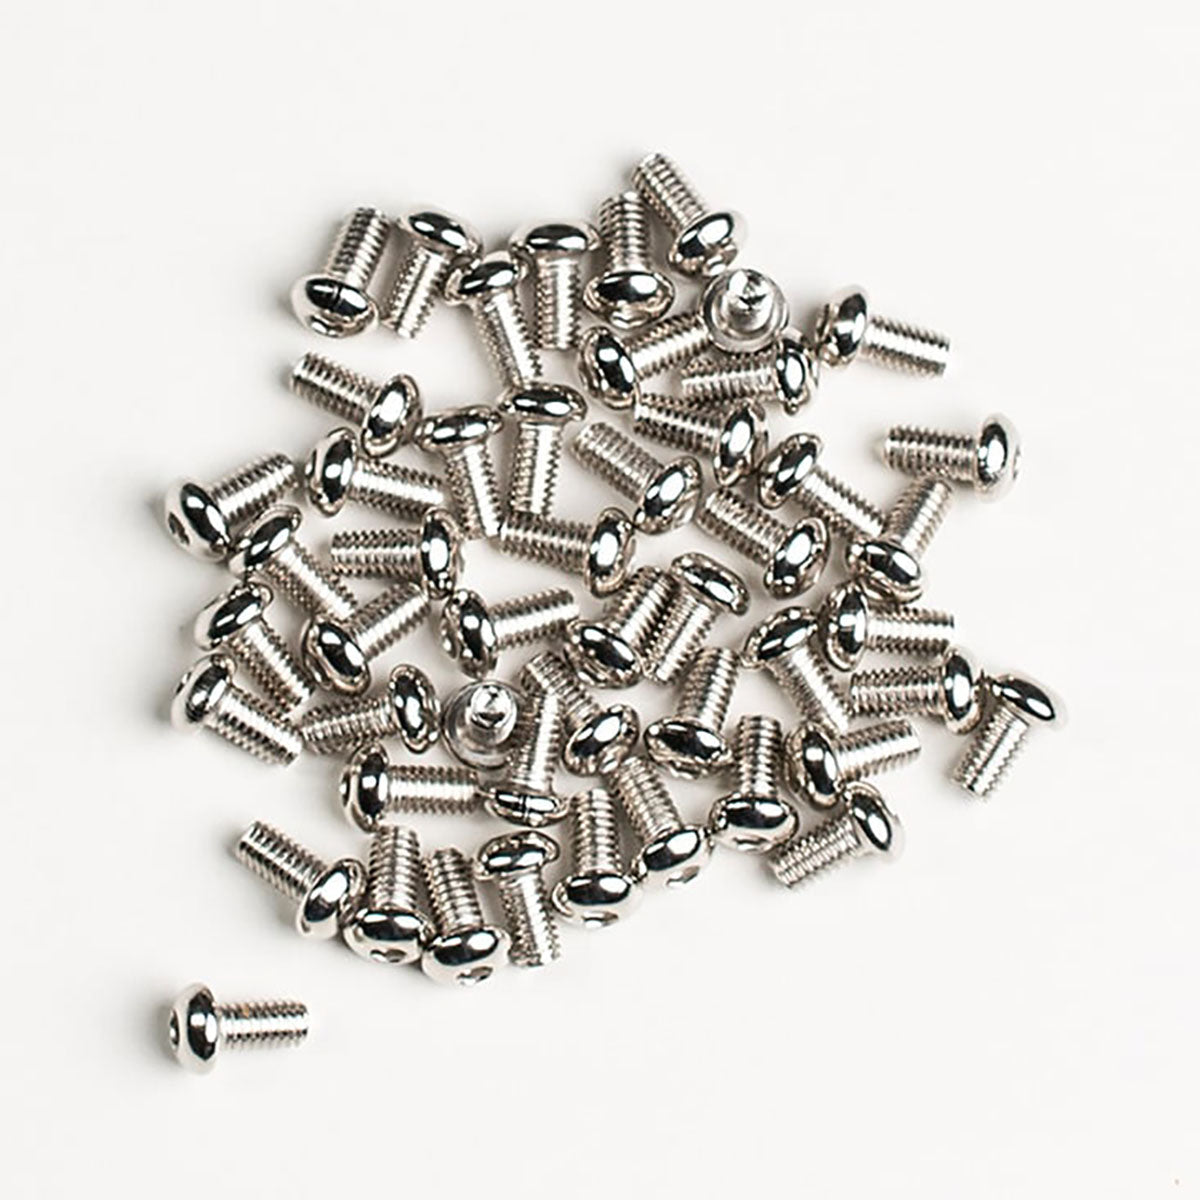 Adafruit Button Hex Machine Screw - M4 thread - 8mm long - 50 pack